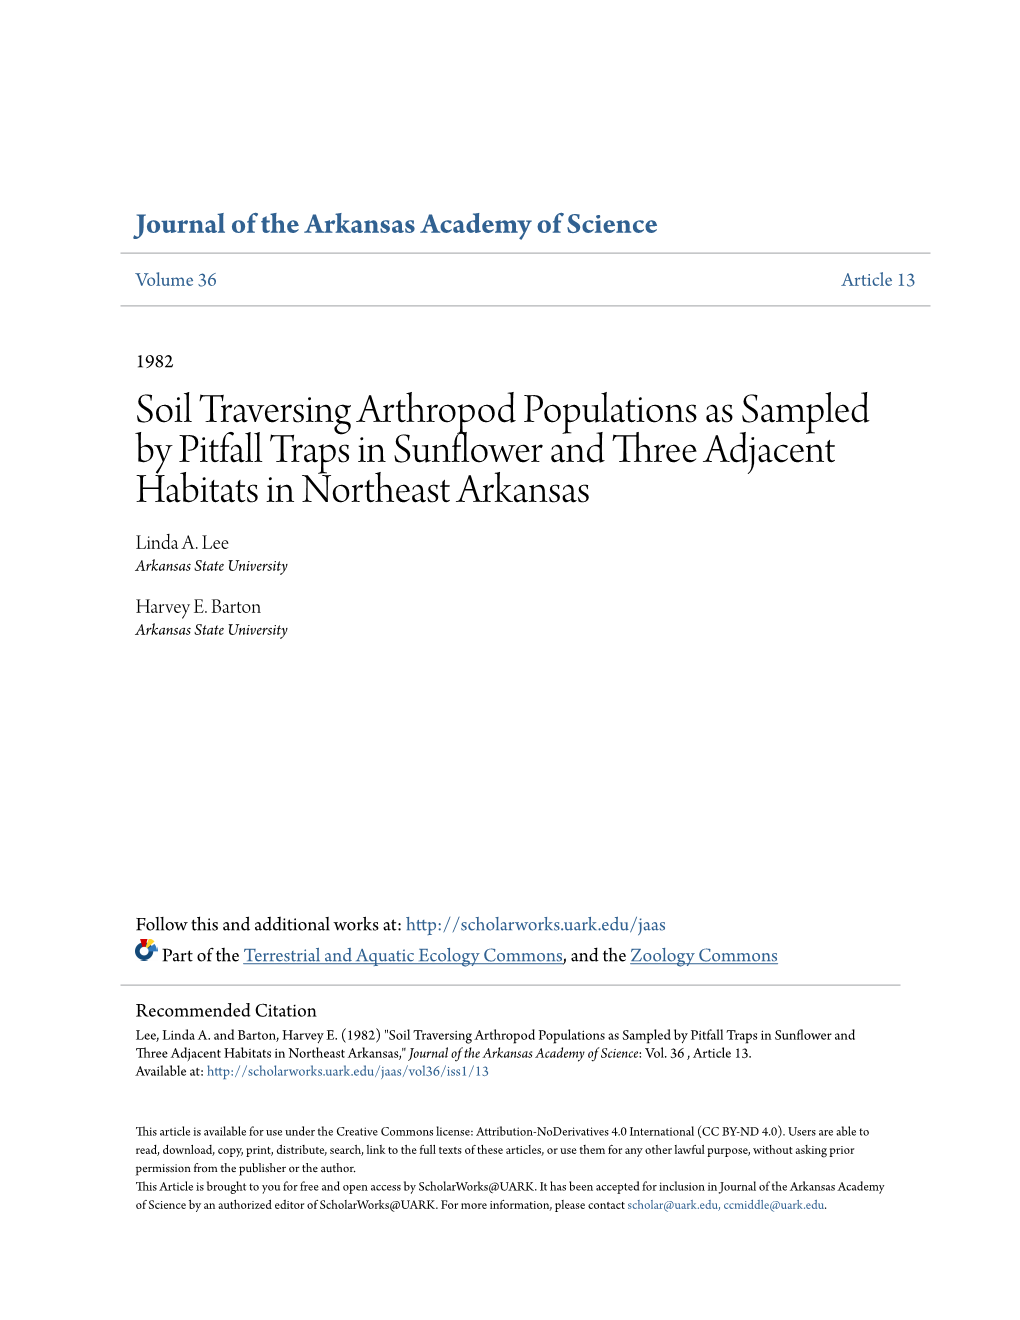 Soil Traversing Arthropod Populations As Sampled by Pitfall Traps in Sunflower and Three Adjacent Habitats in Northeast Arkansas Linda A